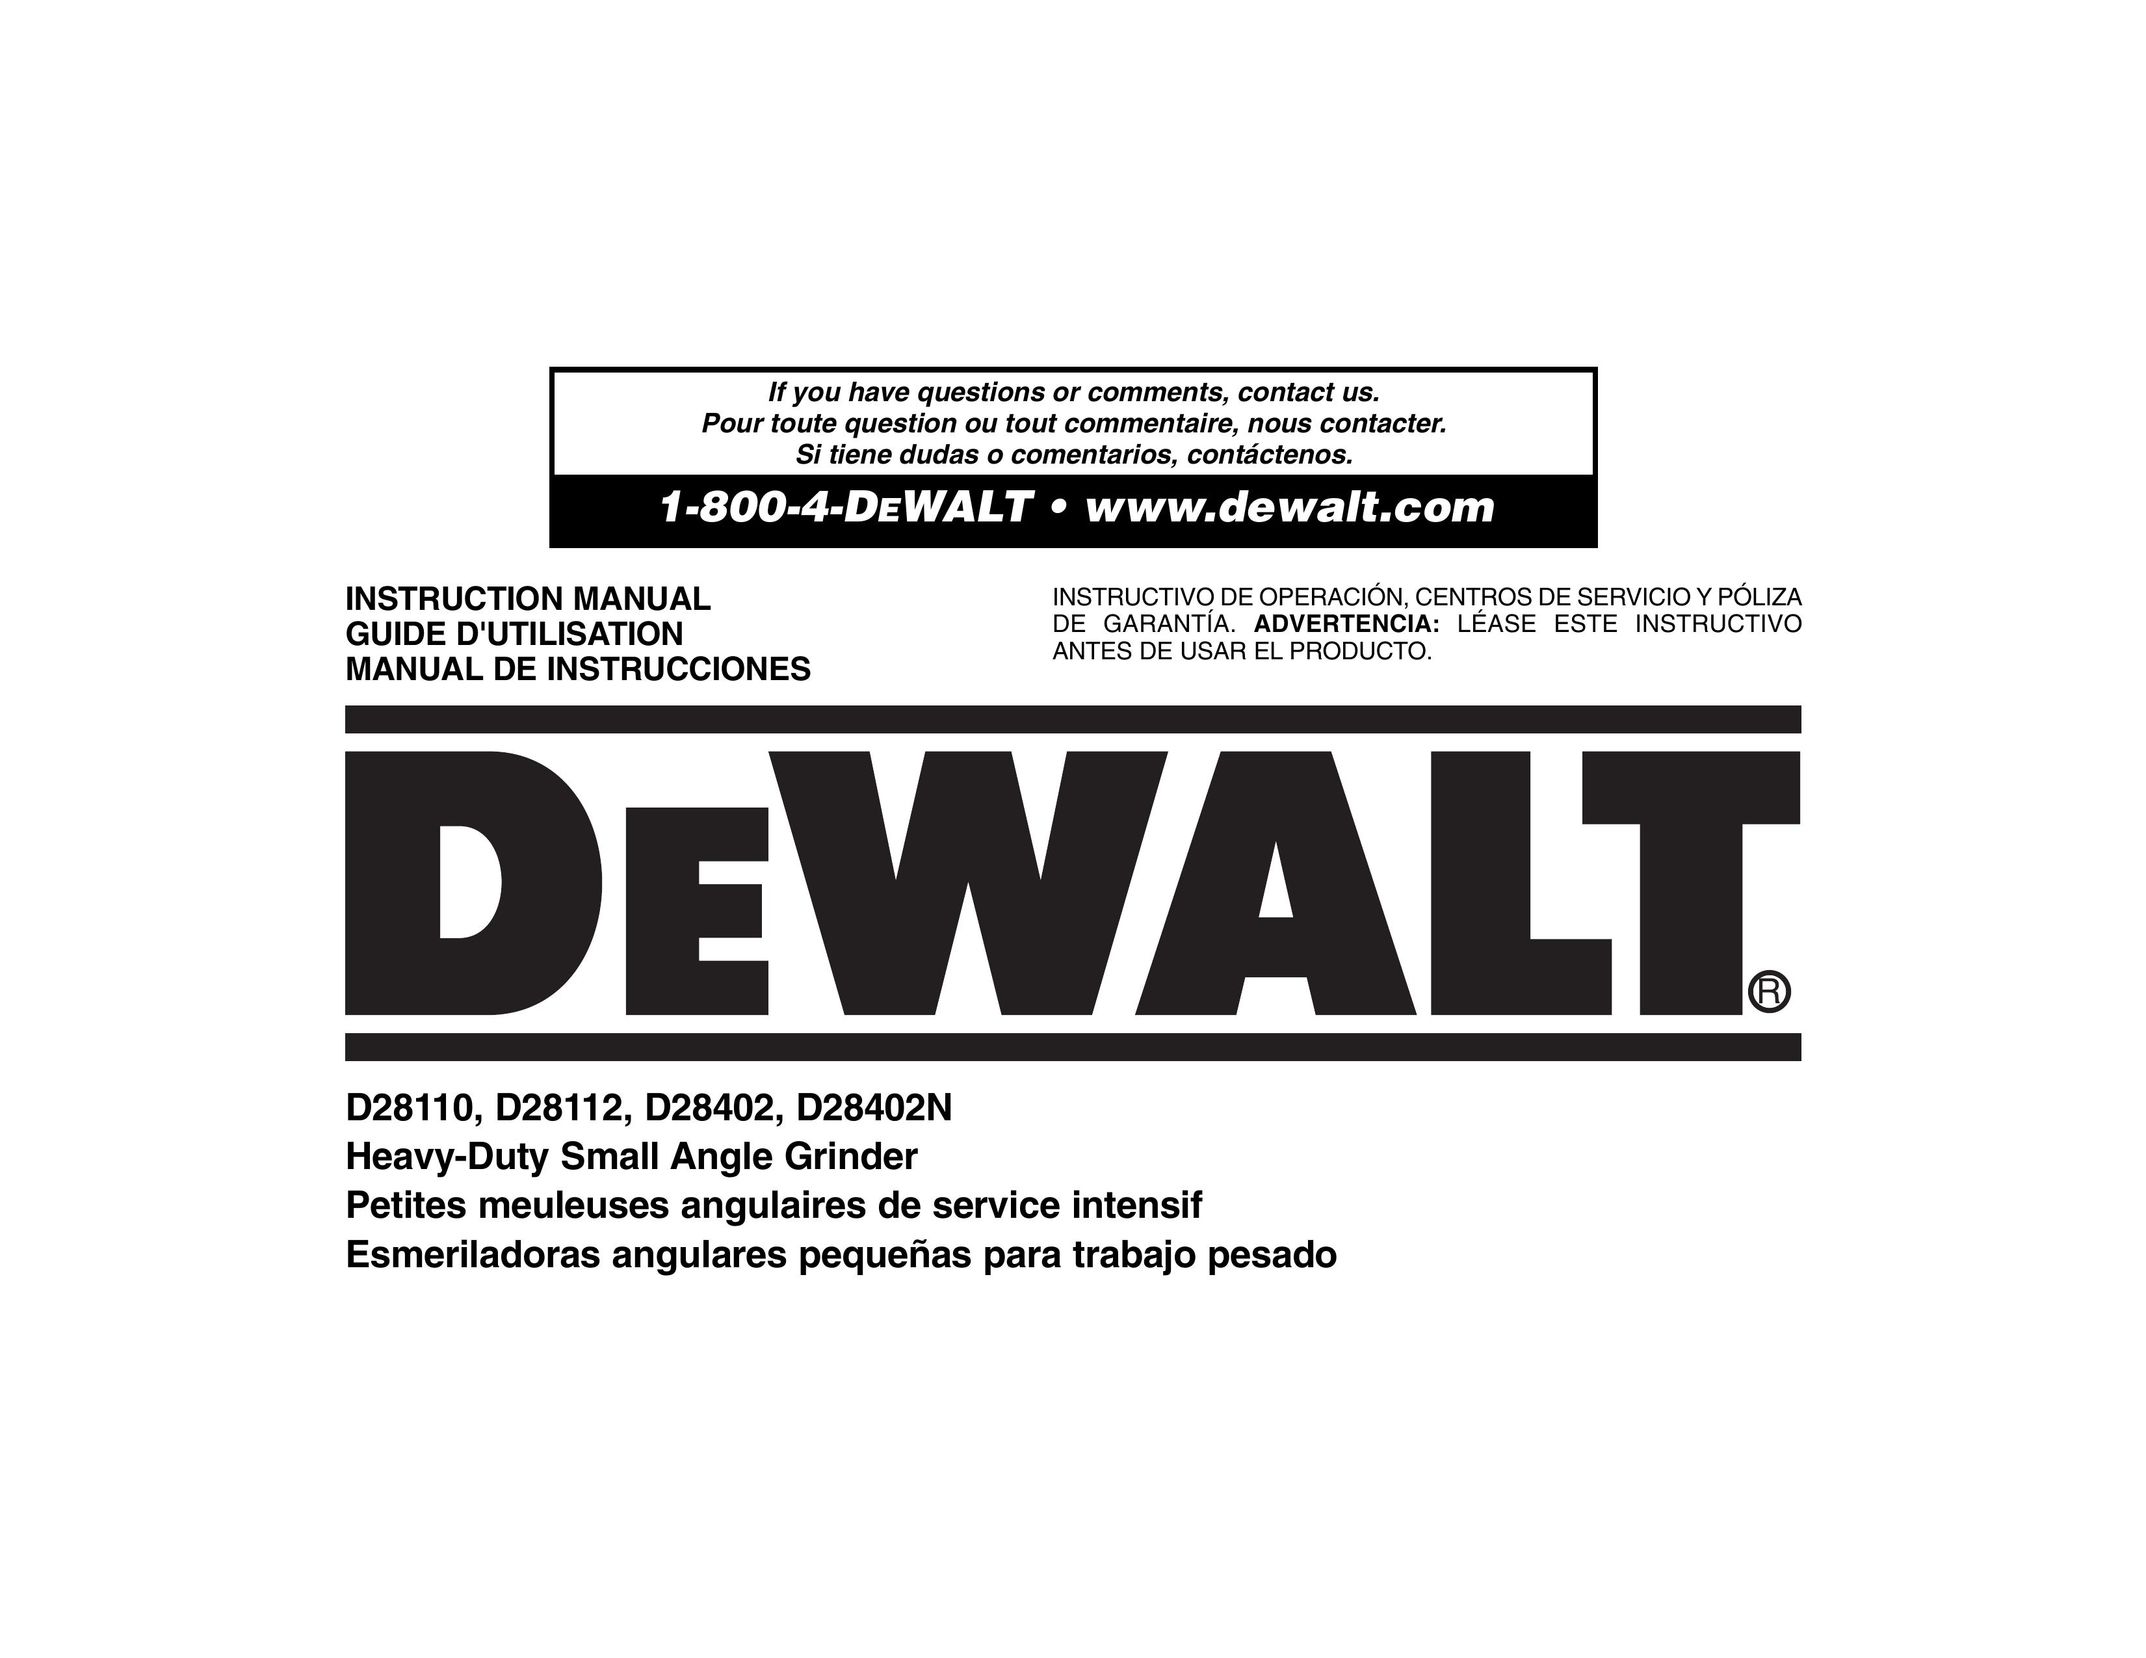 DeWalt D28402N Grinder User Manual